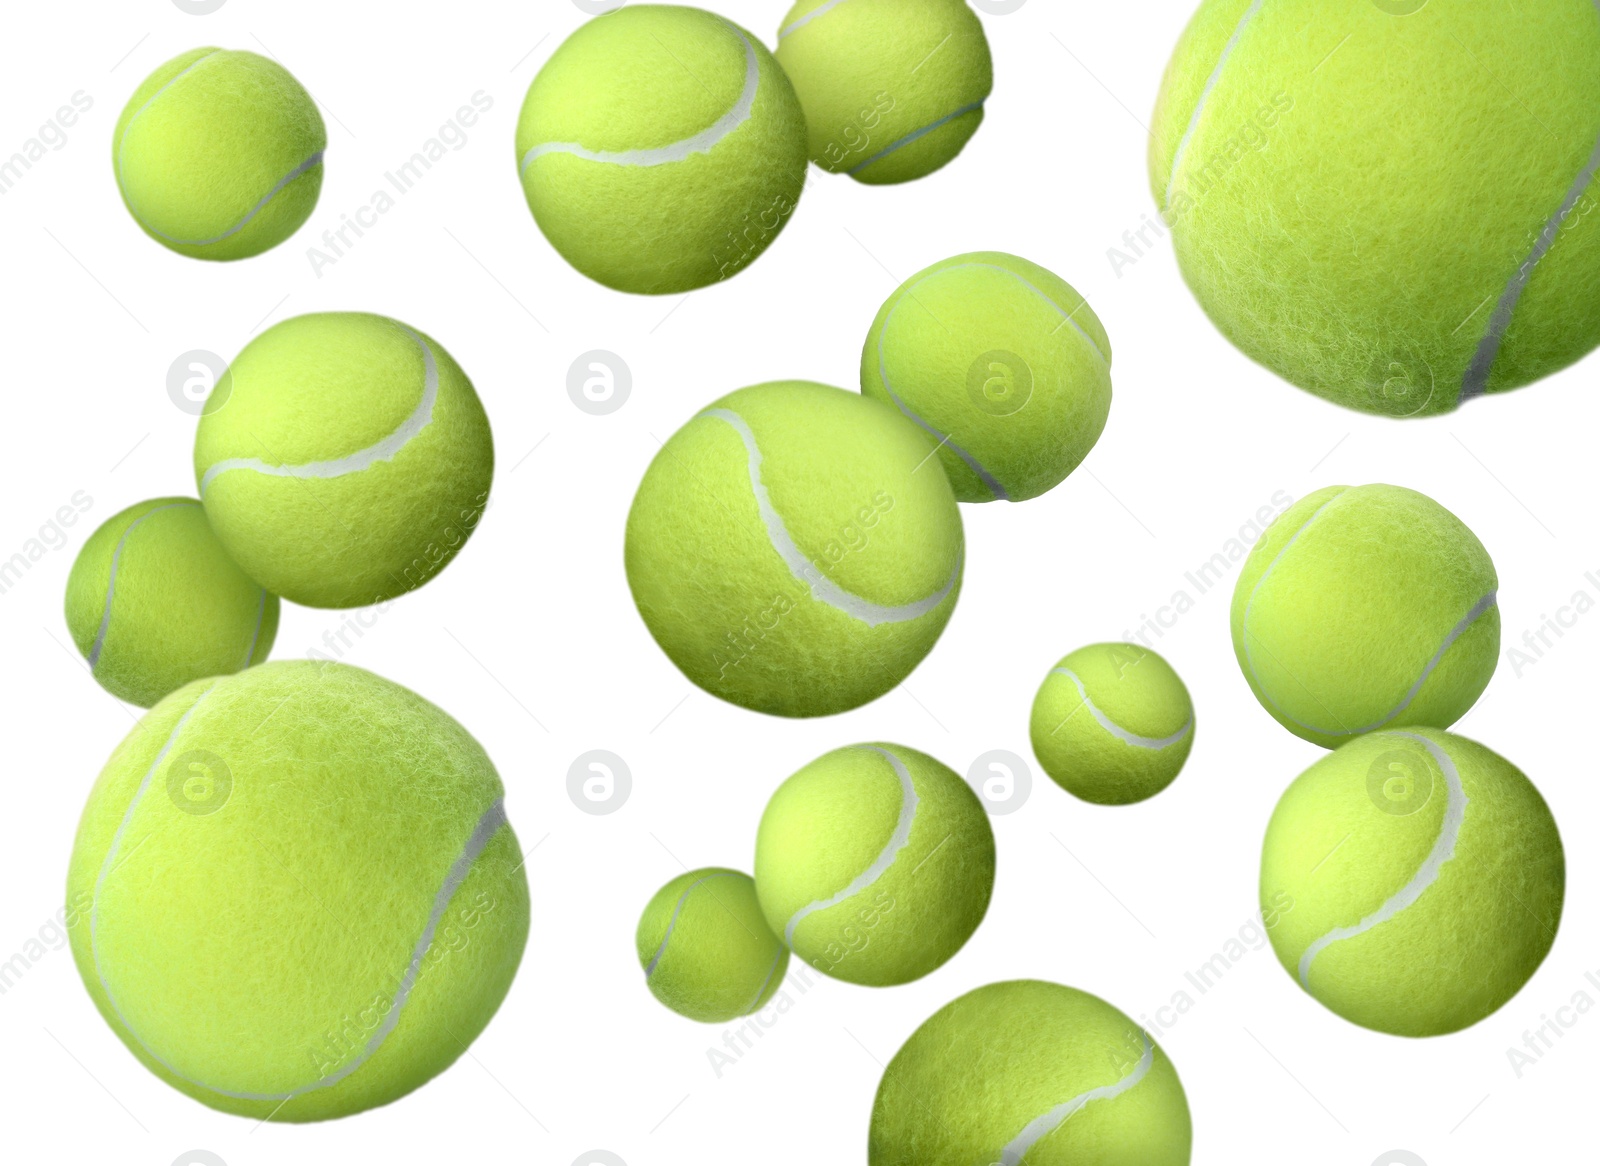 Image of Many tennis balls falling on white background